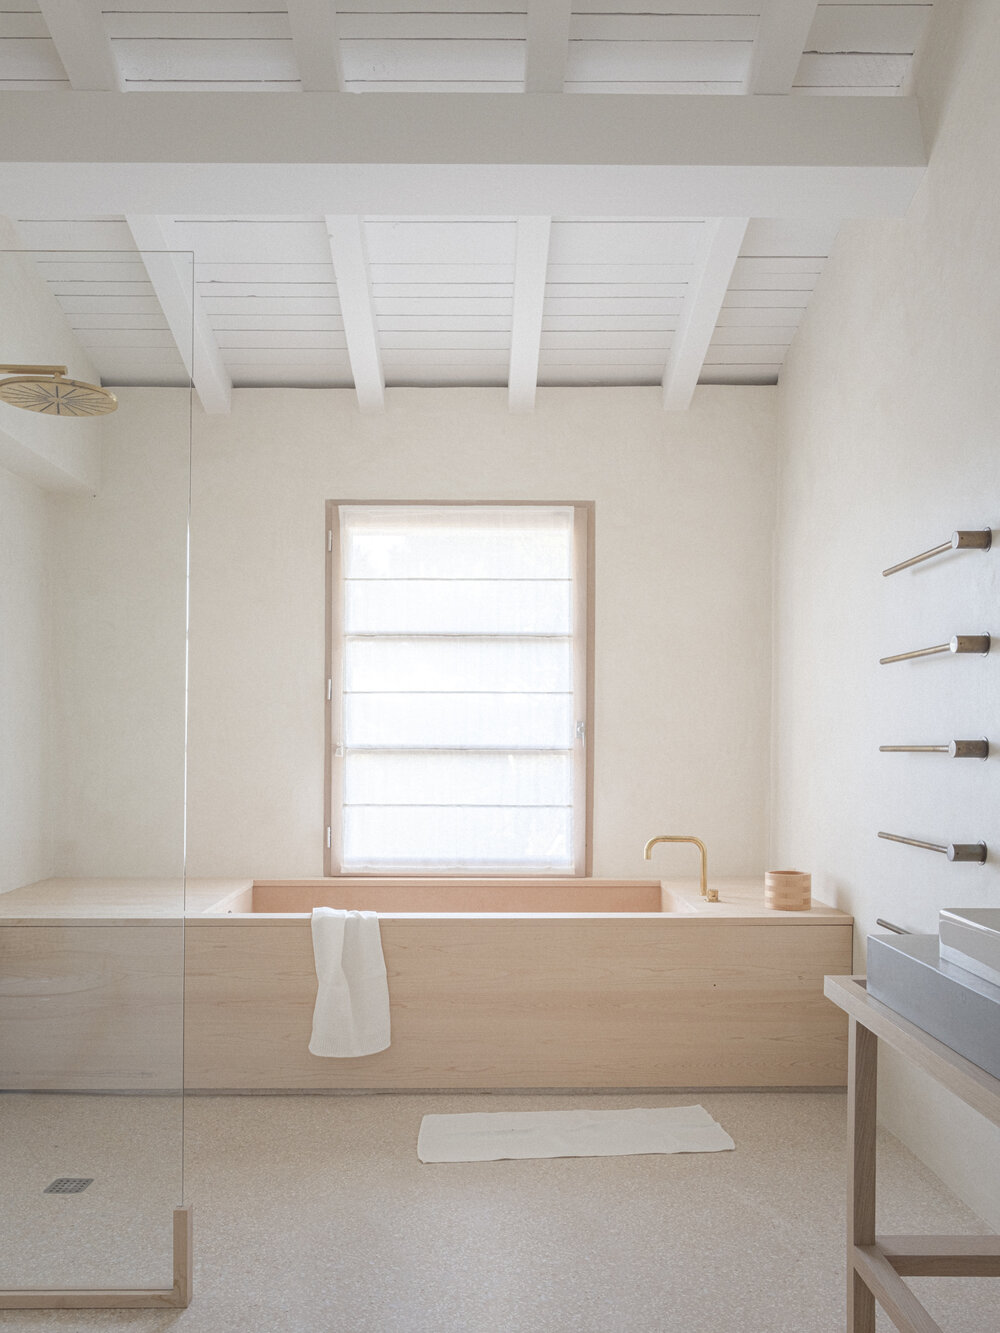 wooden bathtub and terrazzo floor for a minimal bathroom